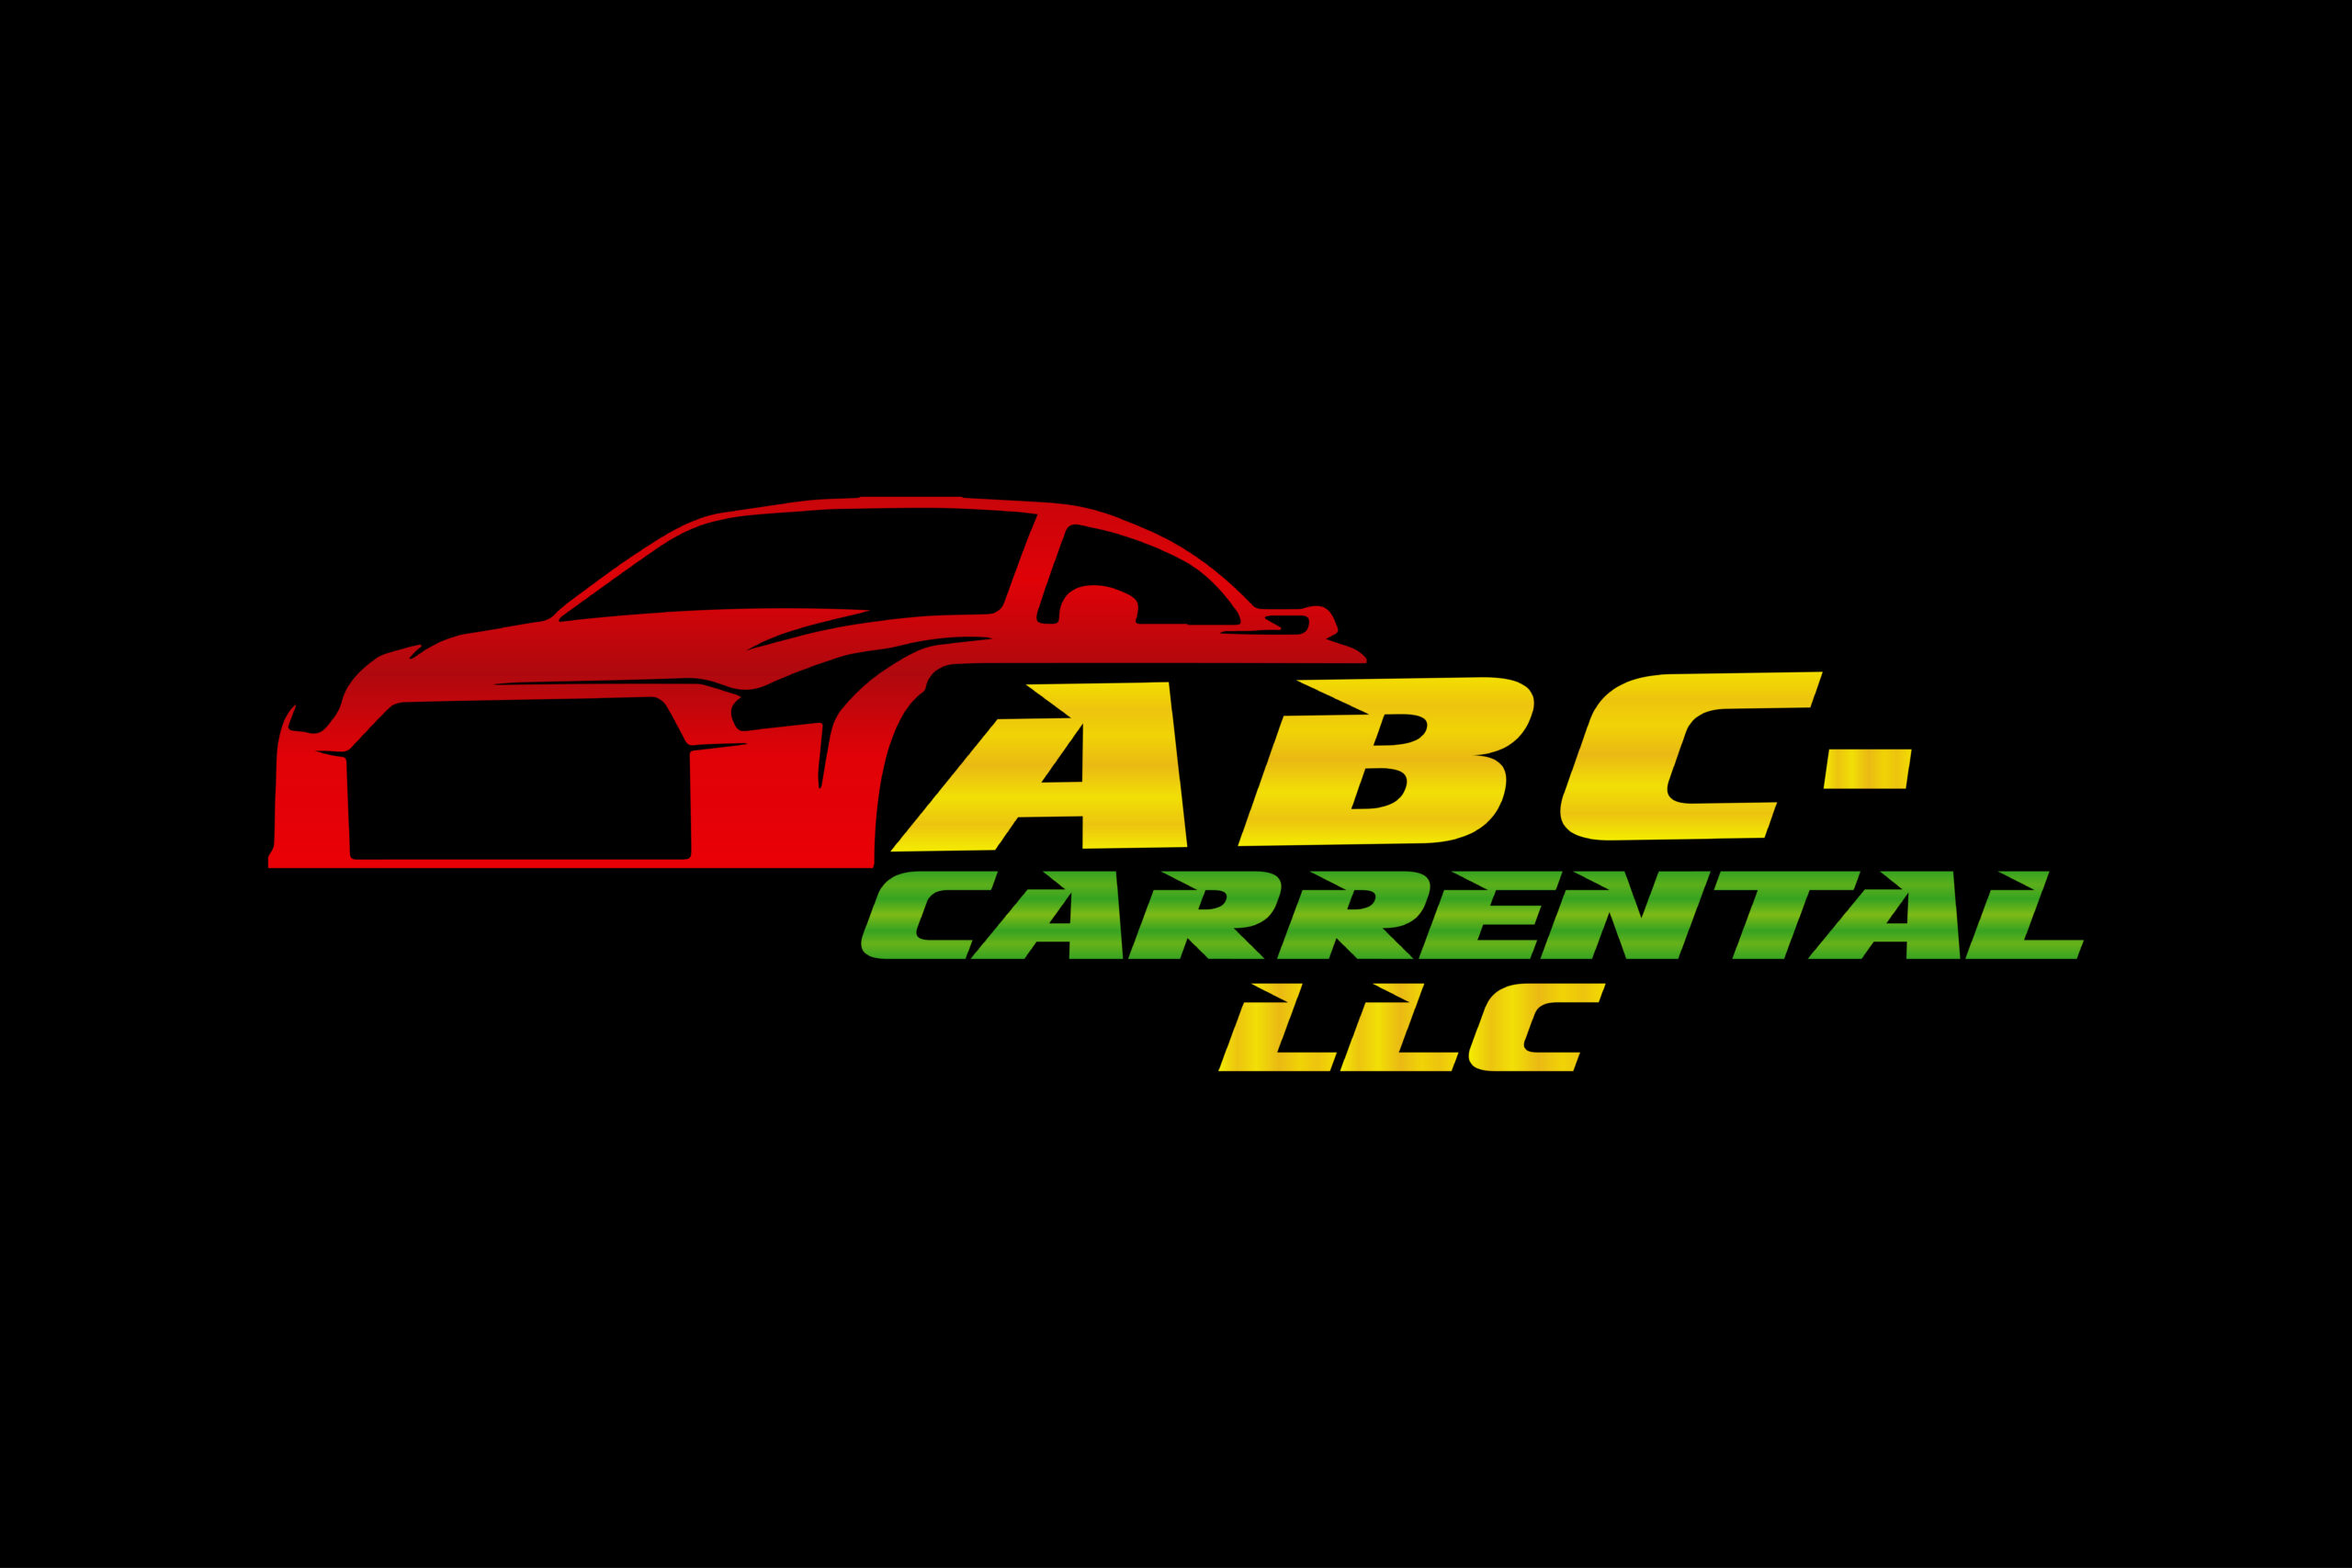 ABC-CARRENTAL LLC